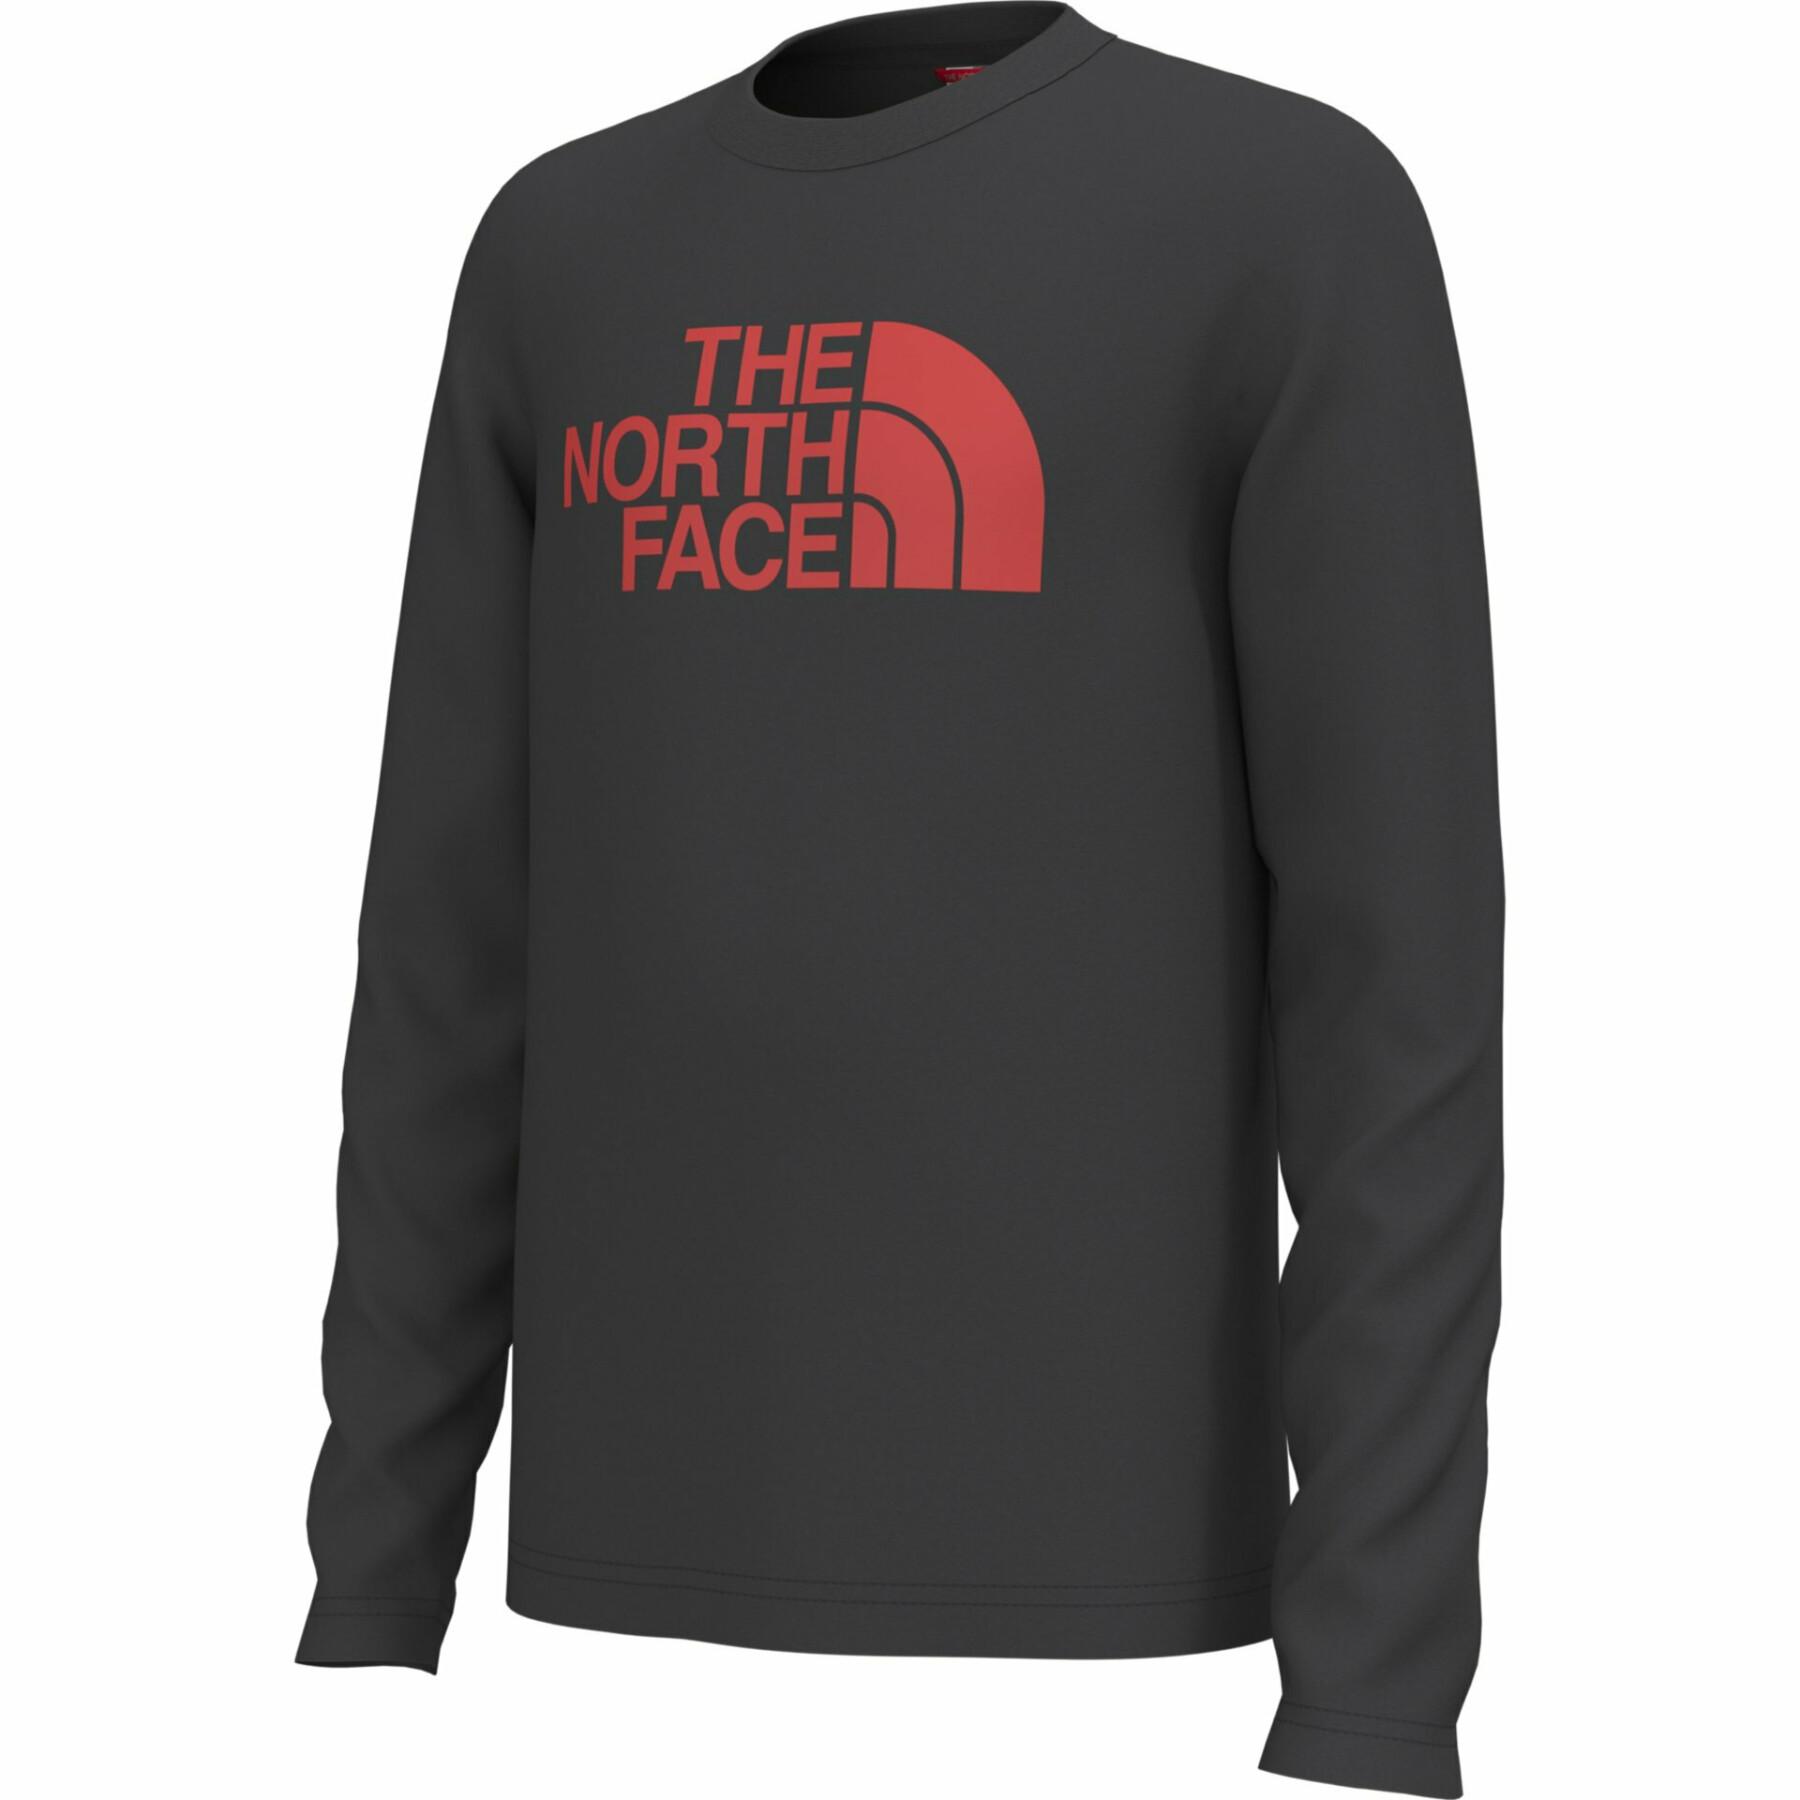 Camiseta de manga larga para niños The North Face Easy